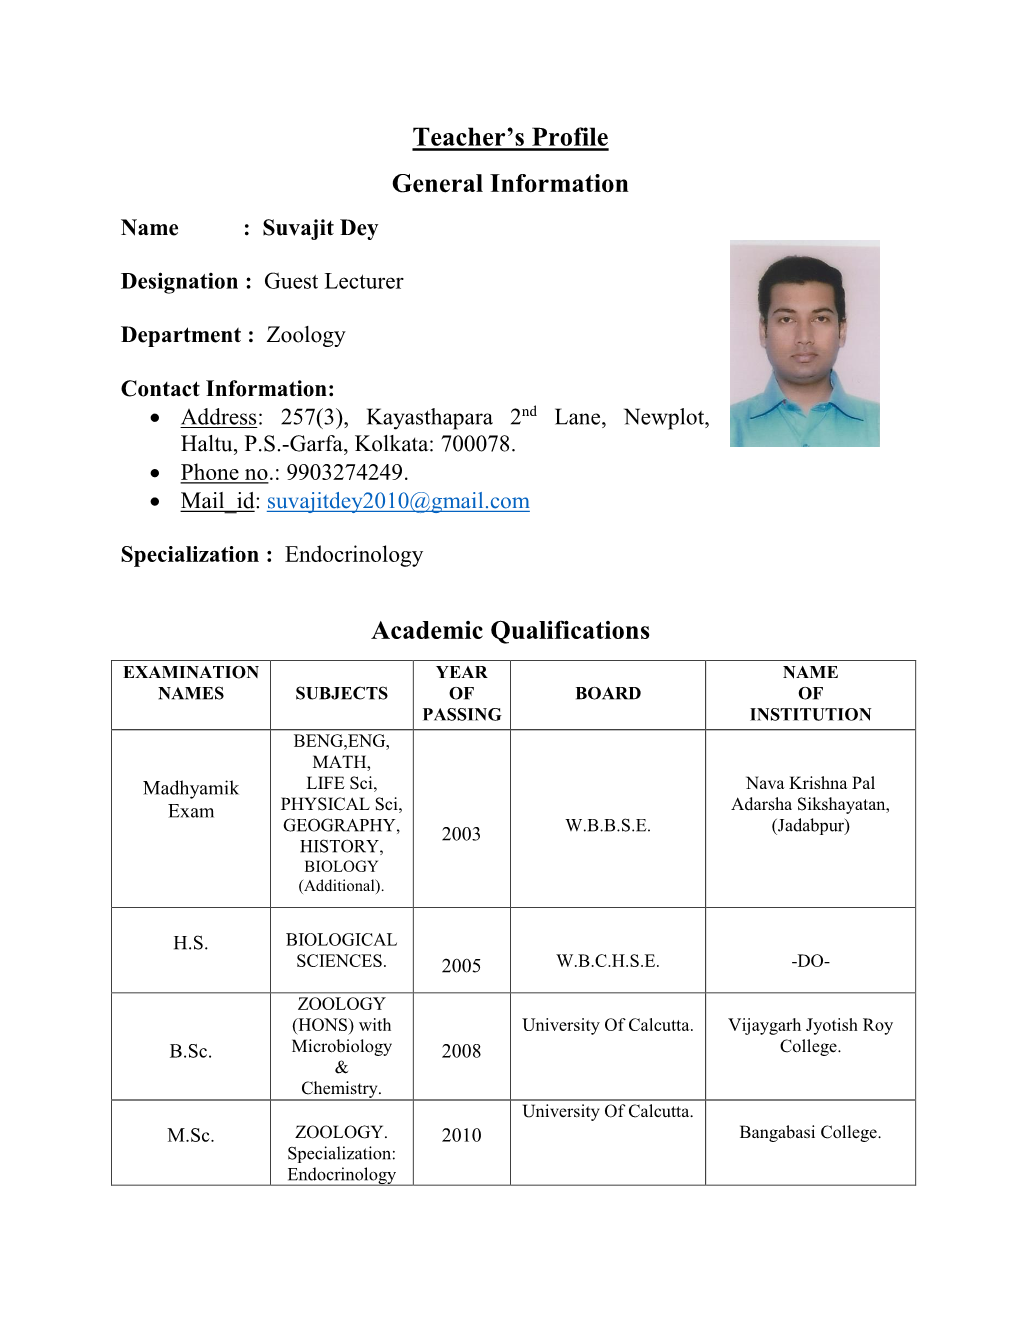 Teacher's Profile General Information Academic Qualifications